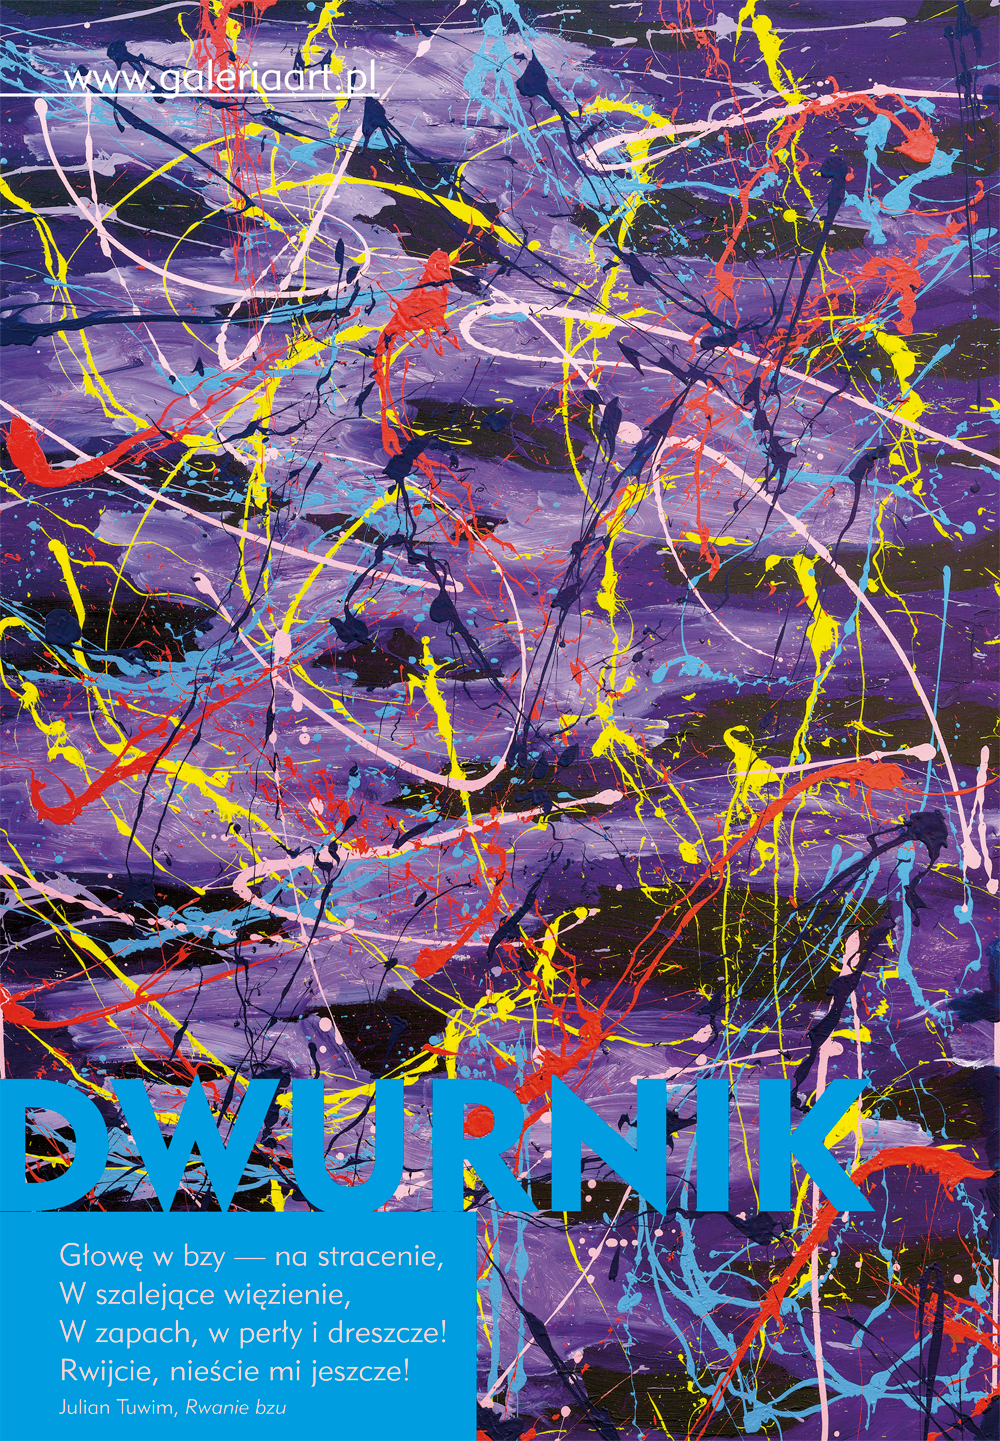 Edward Dwurnik. Paintings in interiors (I)